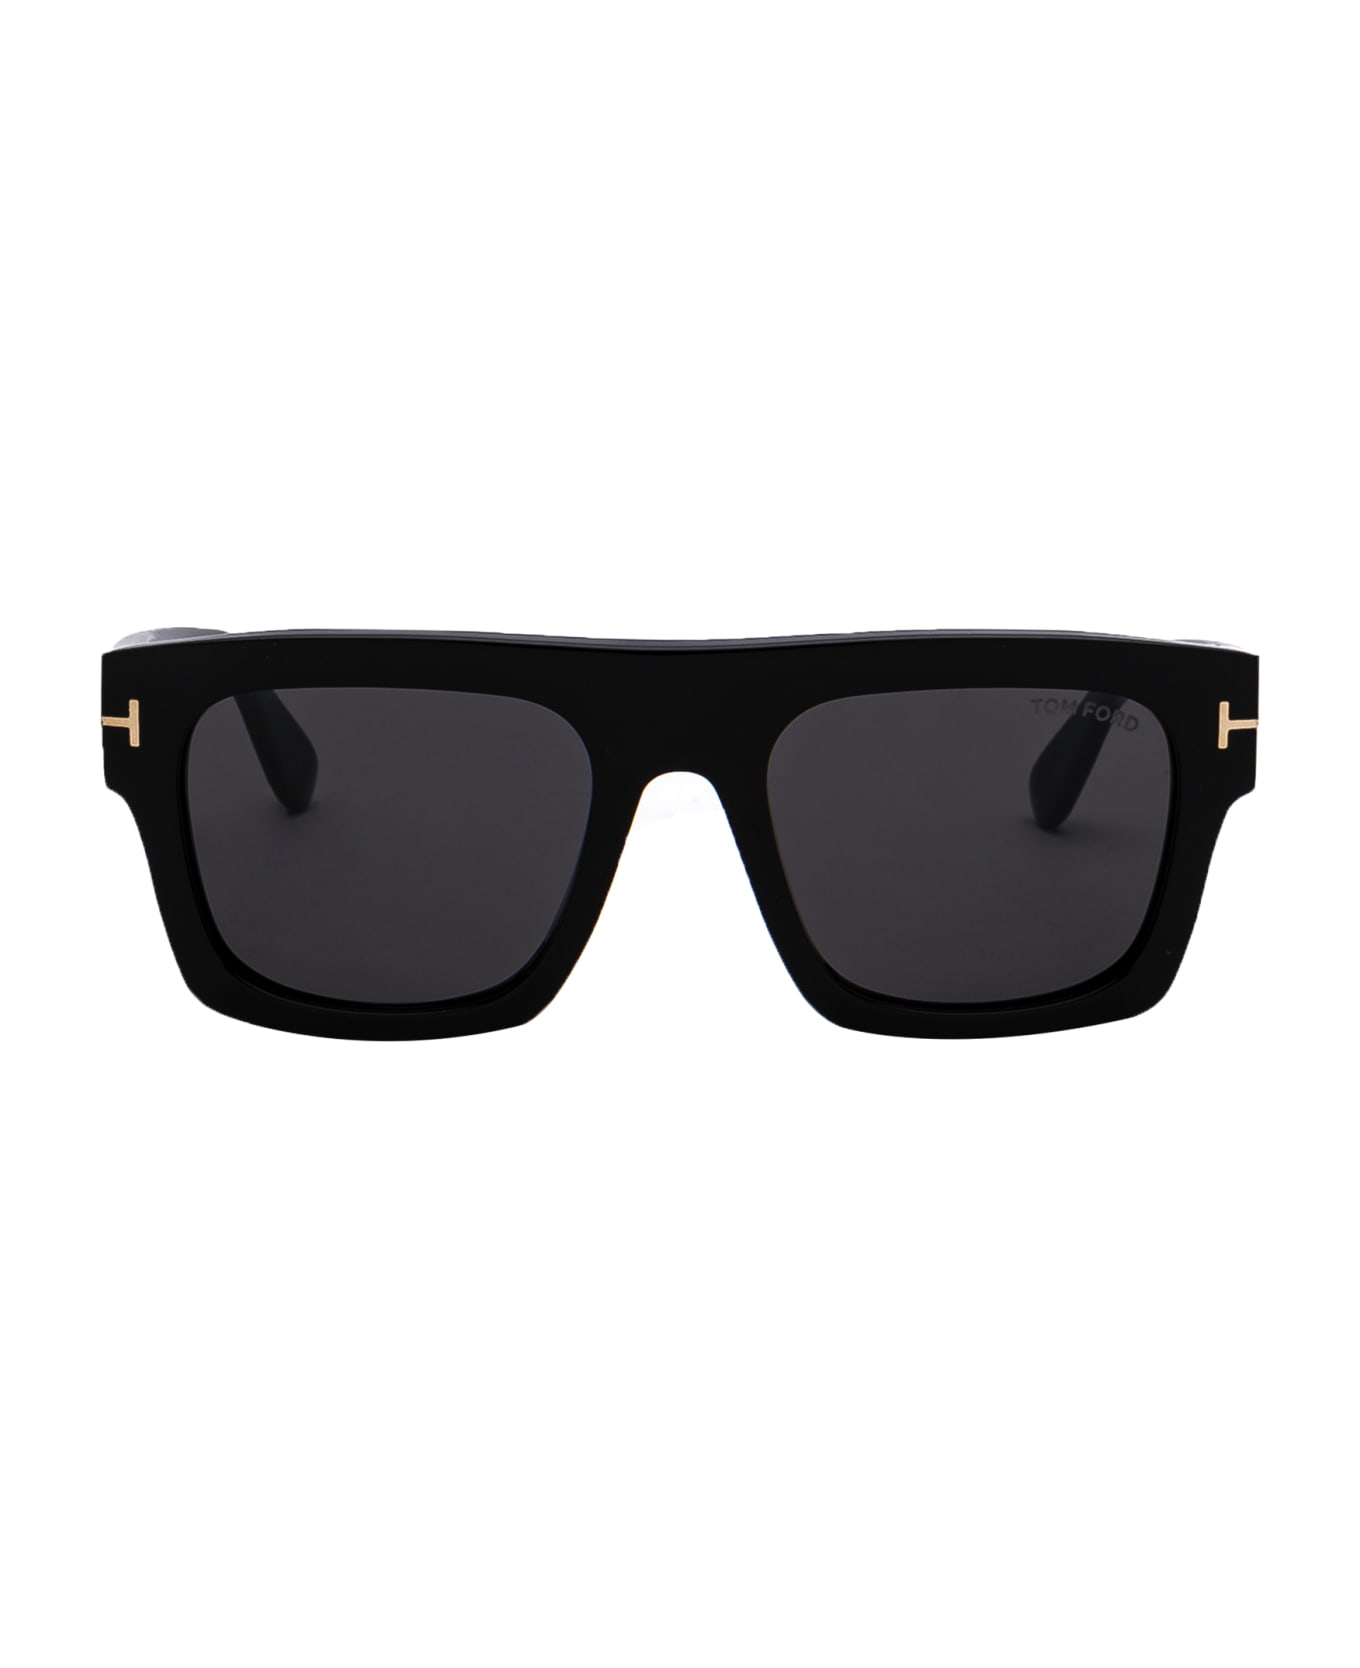 Tom Ford Eyewear Fausto Sunglasses - 01A Nero Lucido / Fumo